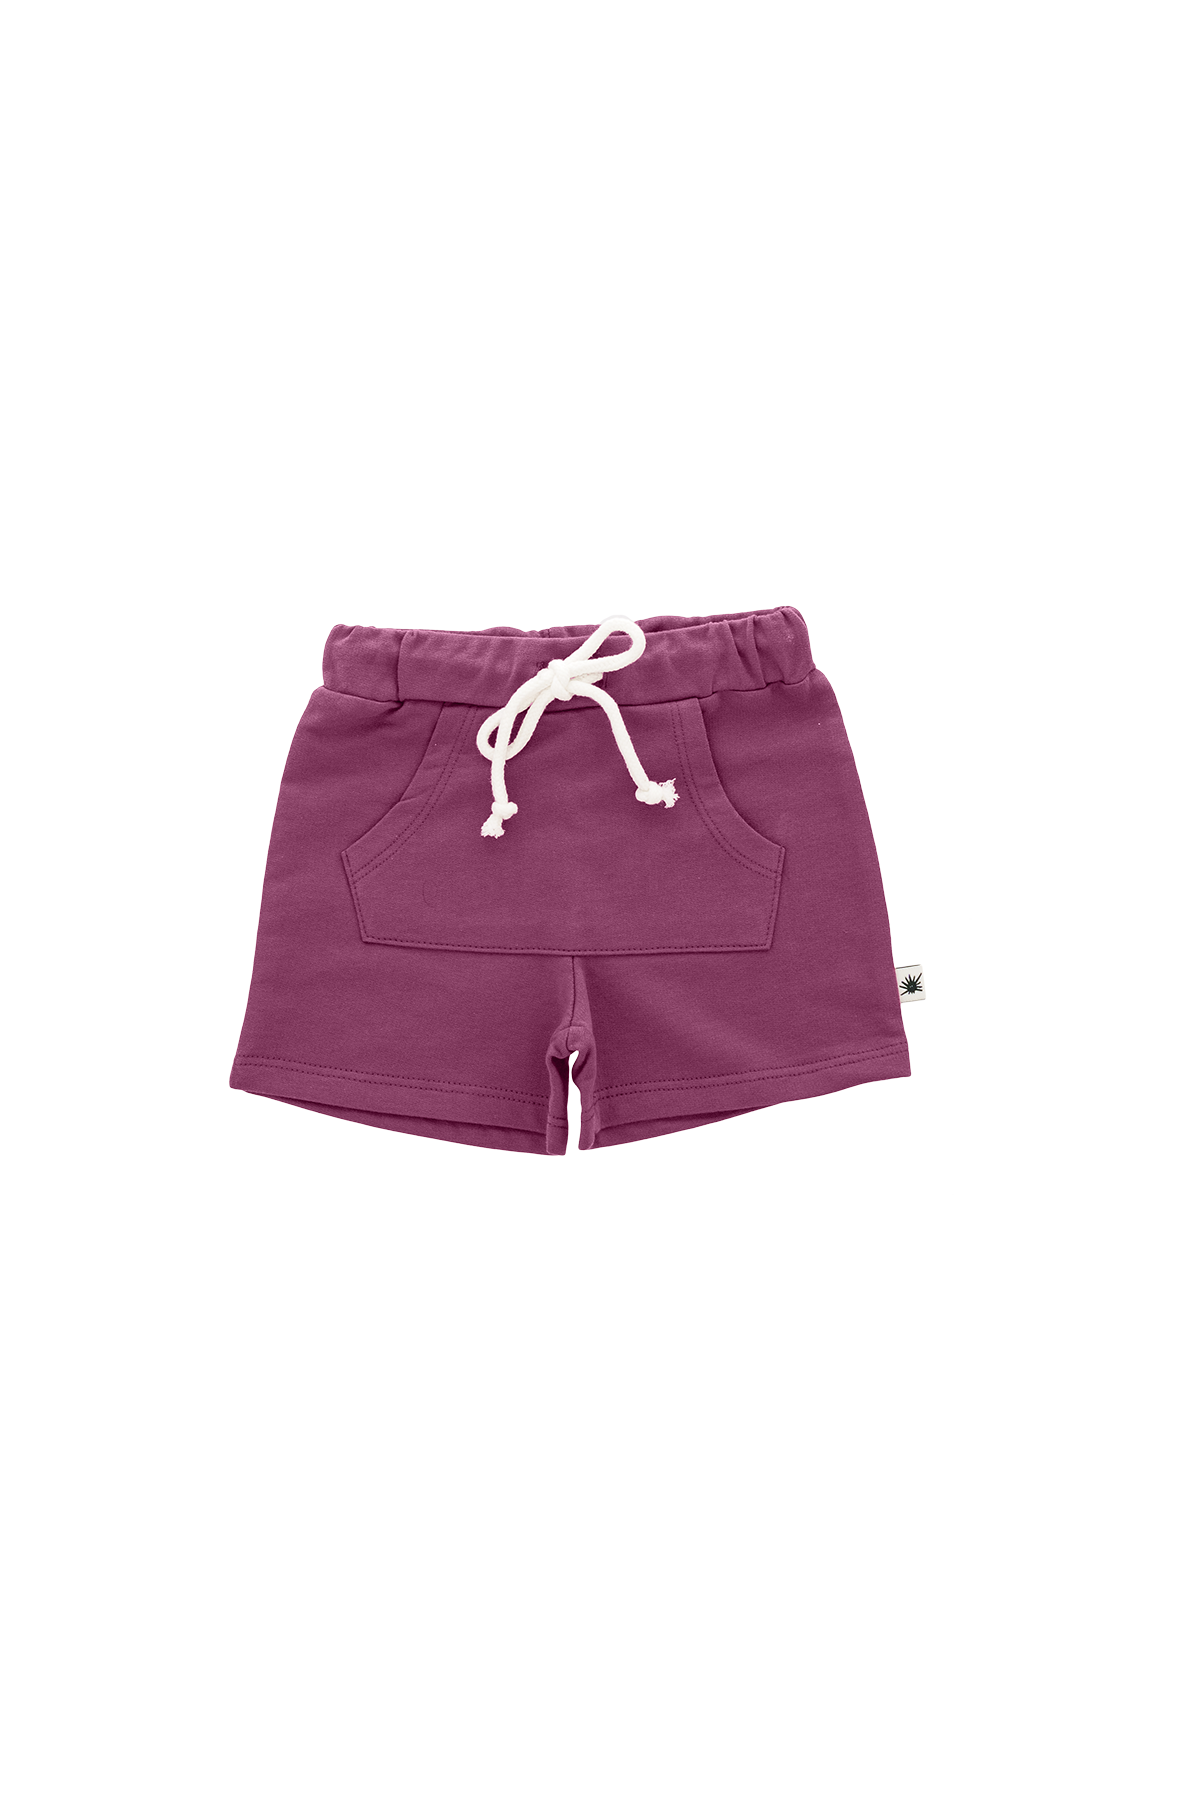 "Pocket" Shorts - Purple